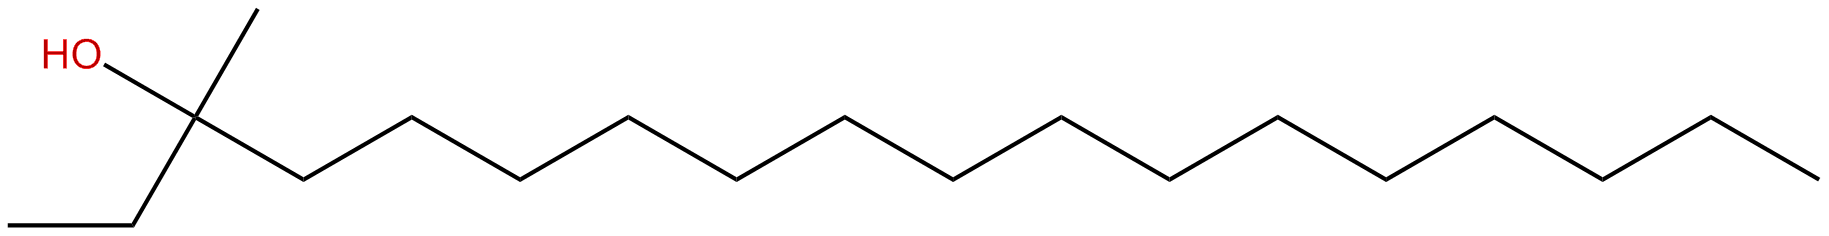 Image of 3-methyl-3-octadecanol